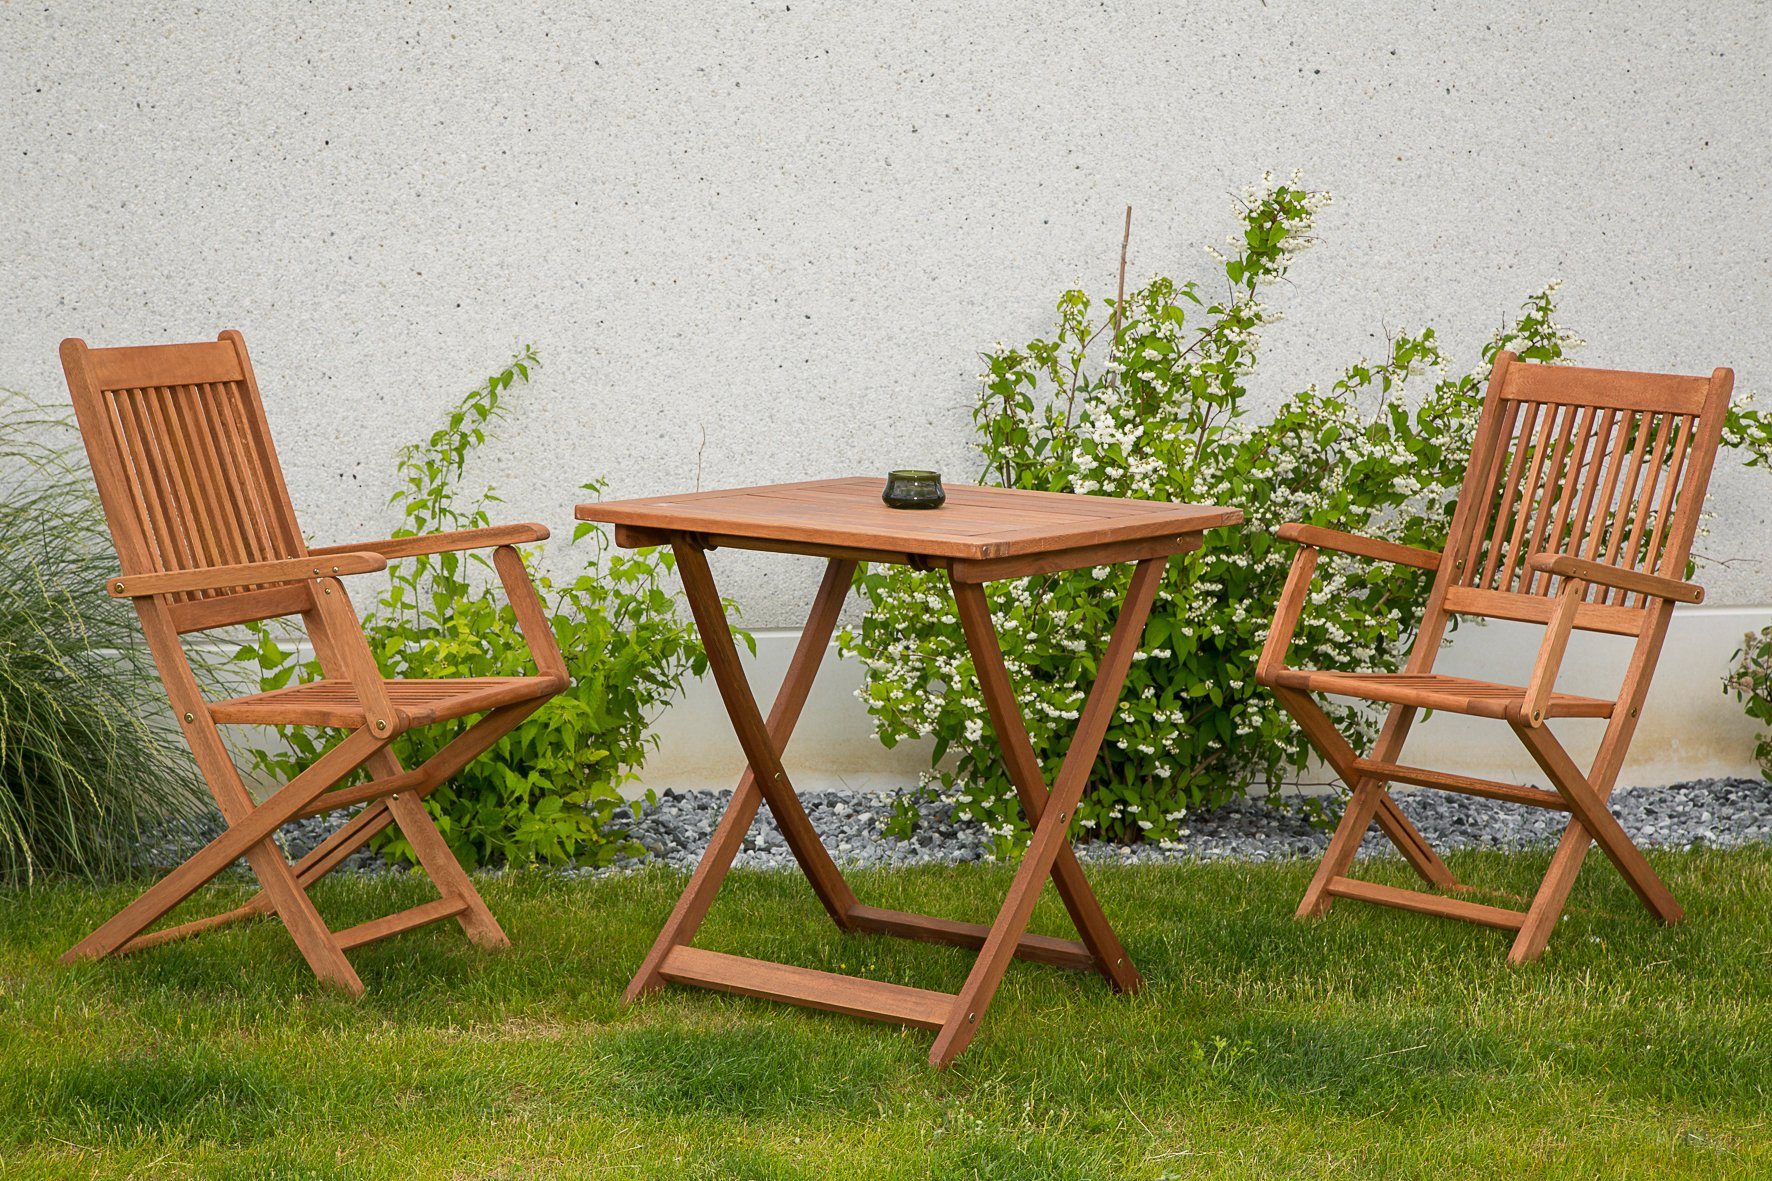 Otto - Merxx MERXX Tuinmeubelset Rio, 3-dlg., 2 stoelen, 1 tafel 70x70 cm, inklapbaar, eucalyptus